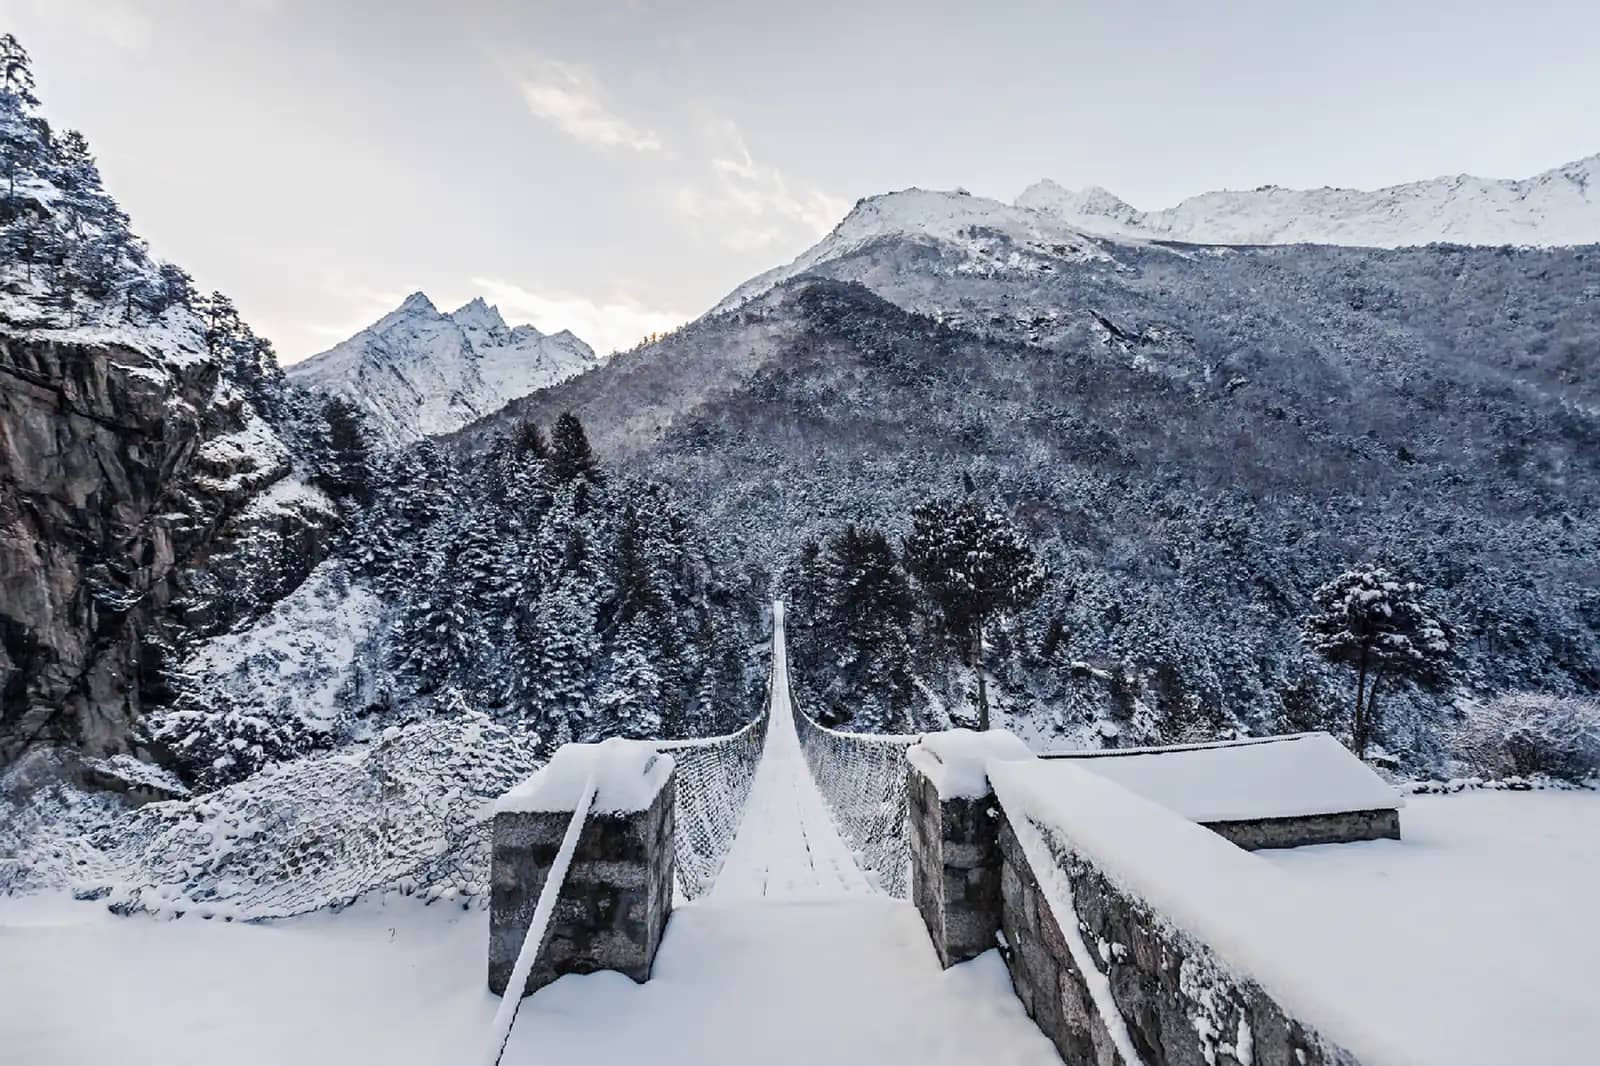 Suspension Bridge - Everest Base Camp Trek in January